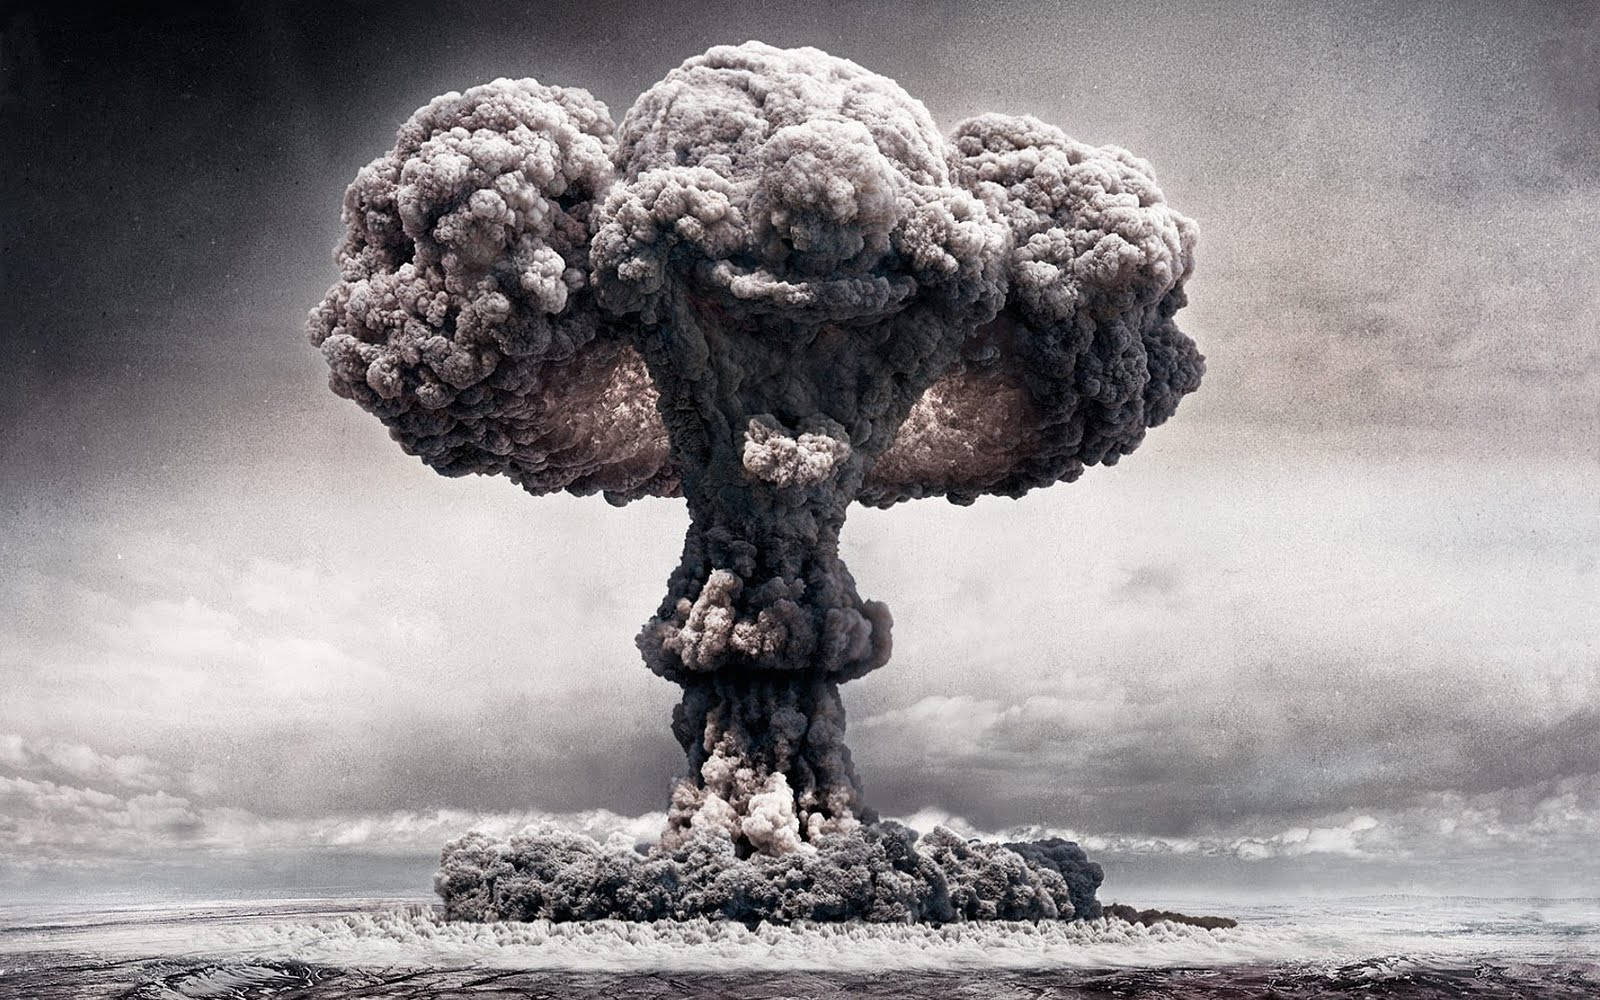 atom bomb explosion wallpaper